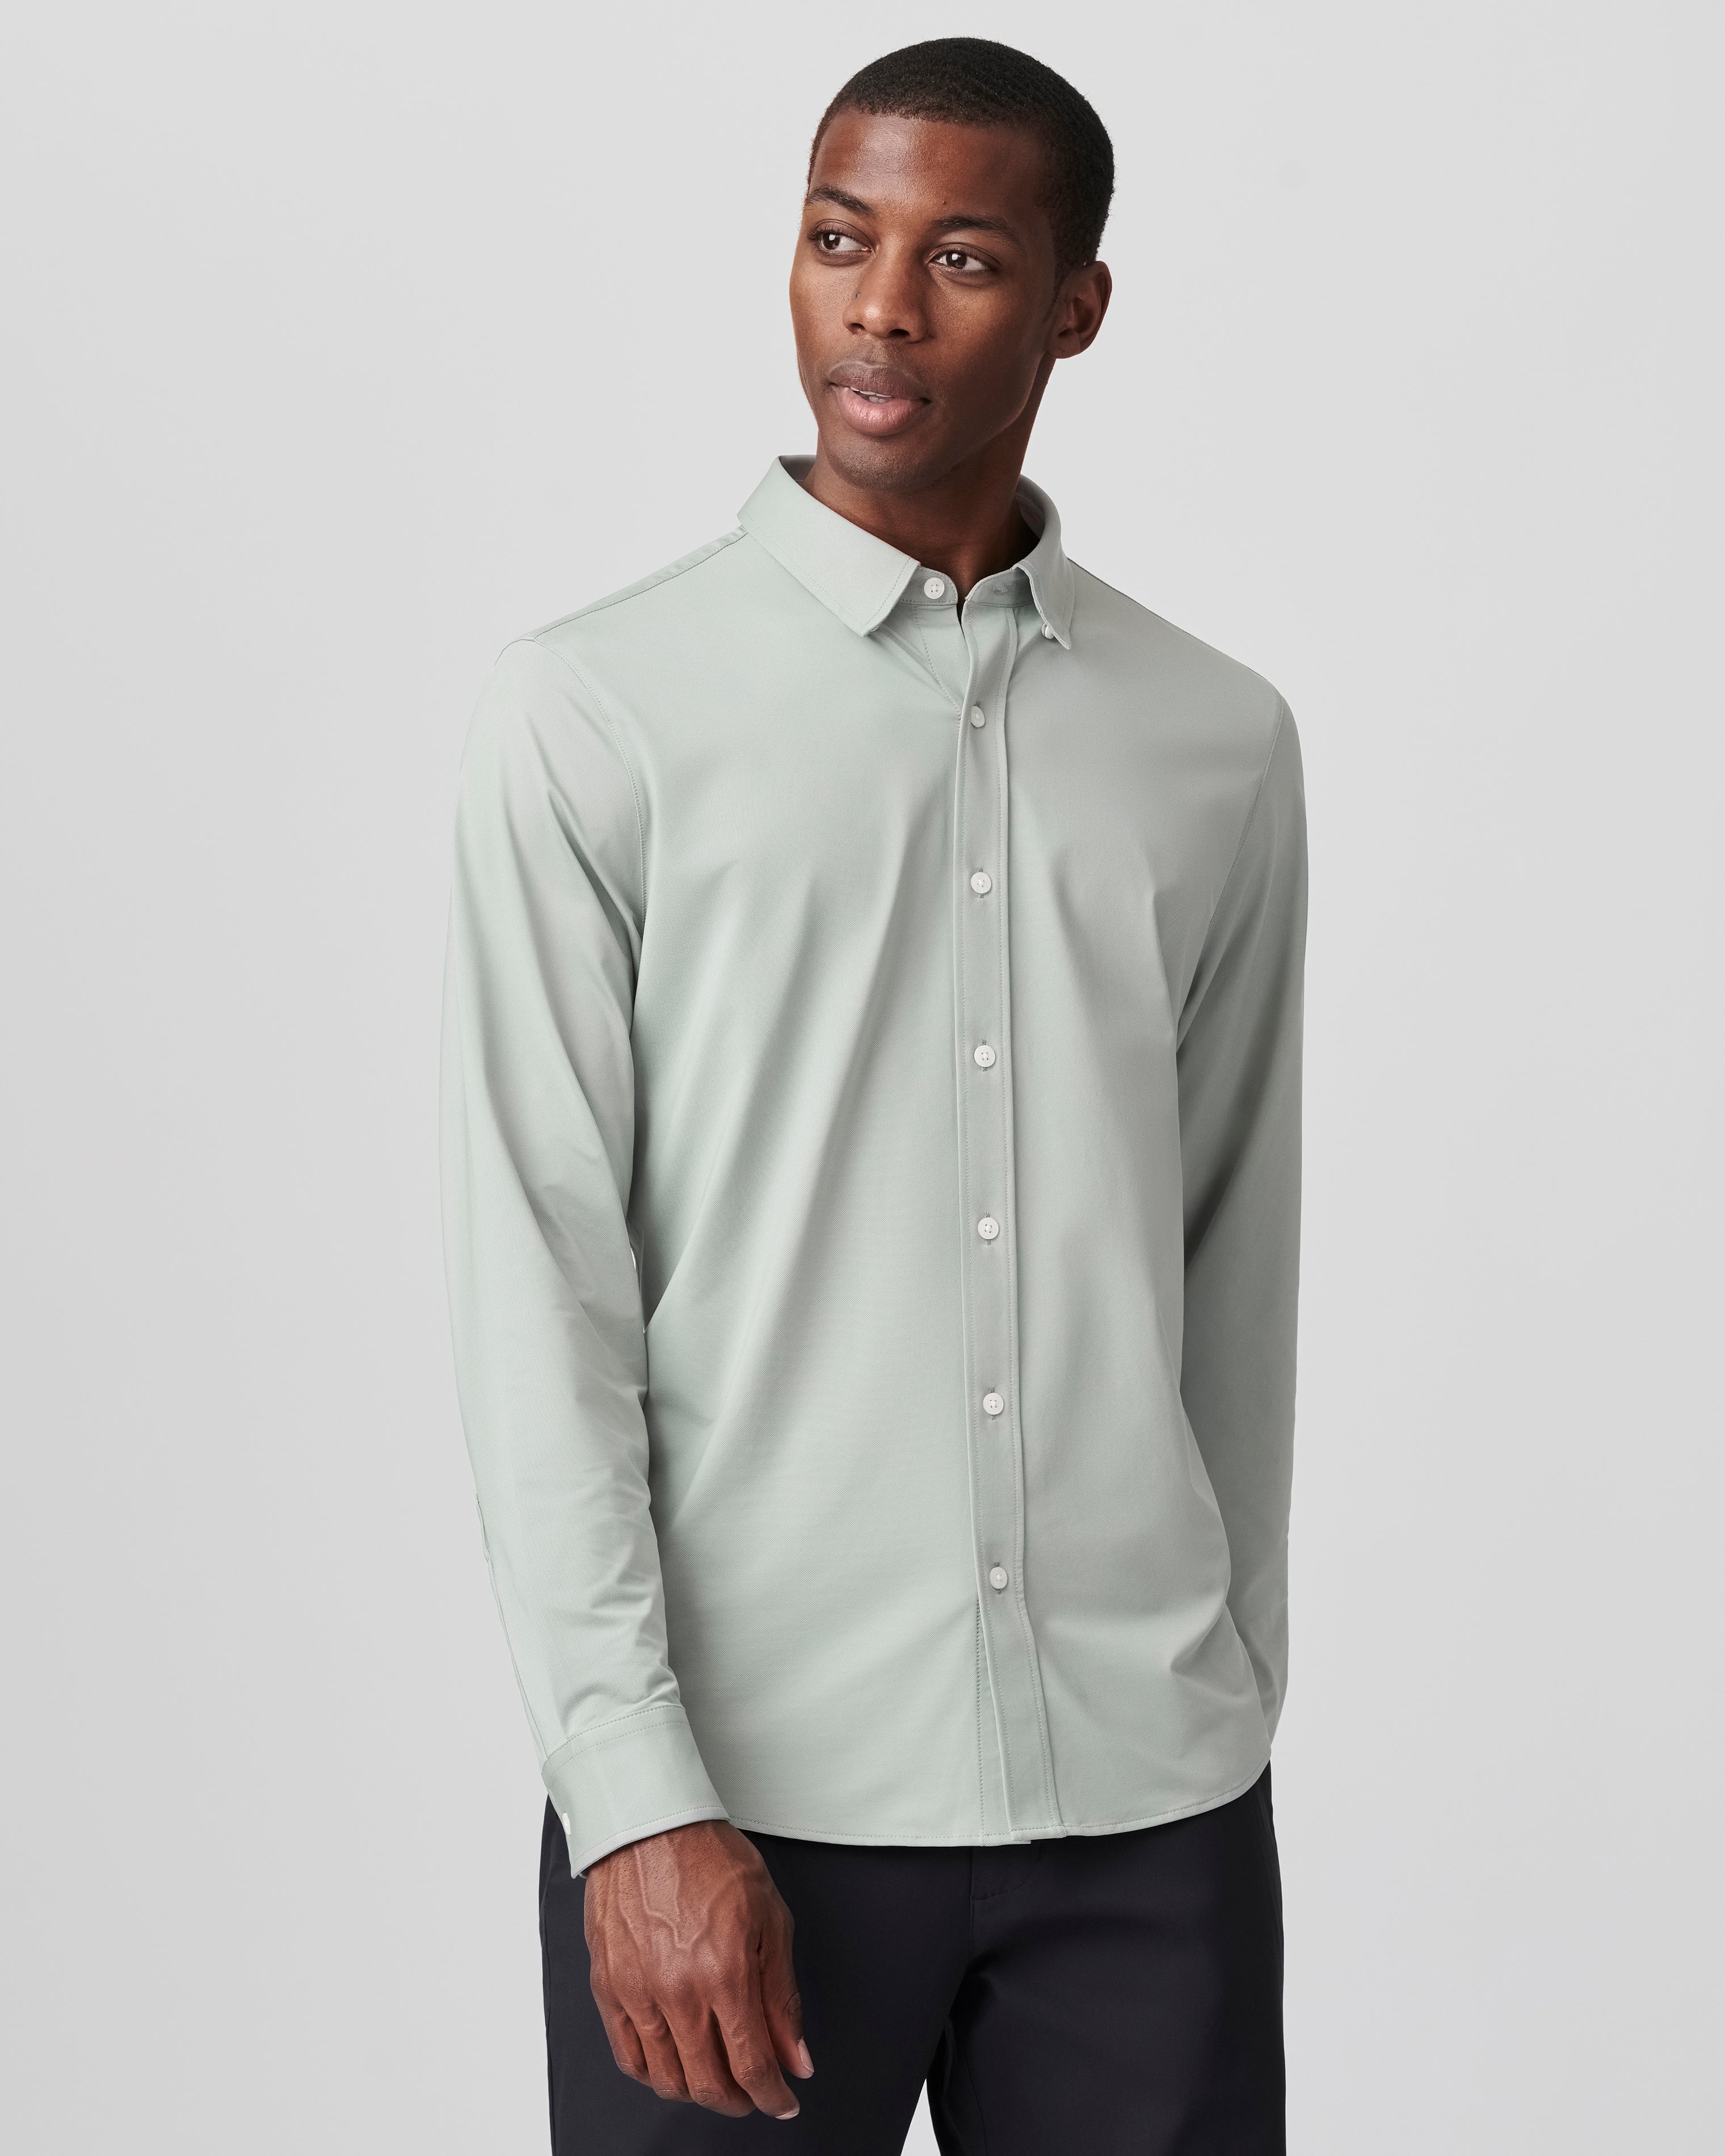 Commuter Shirt - Slim Fit XL / Sage Green Oxford